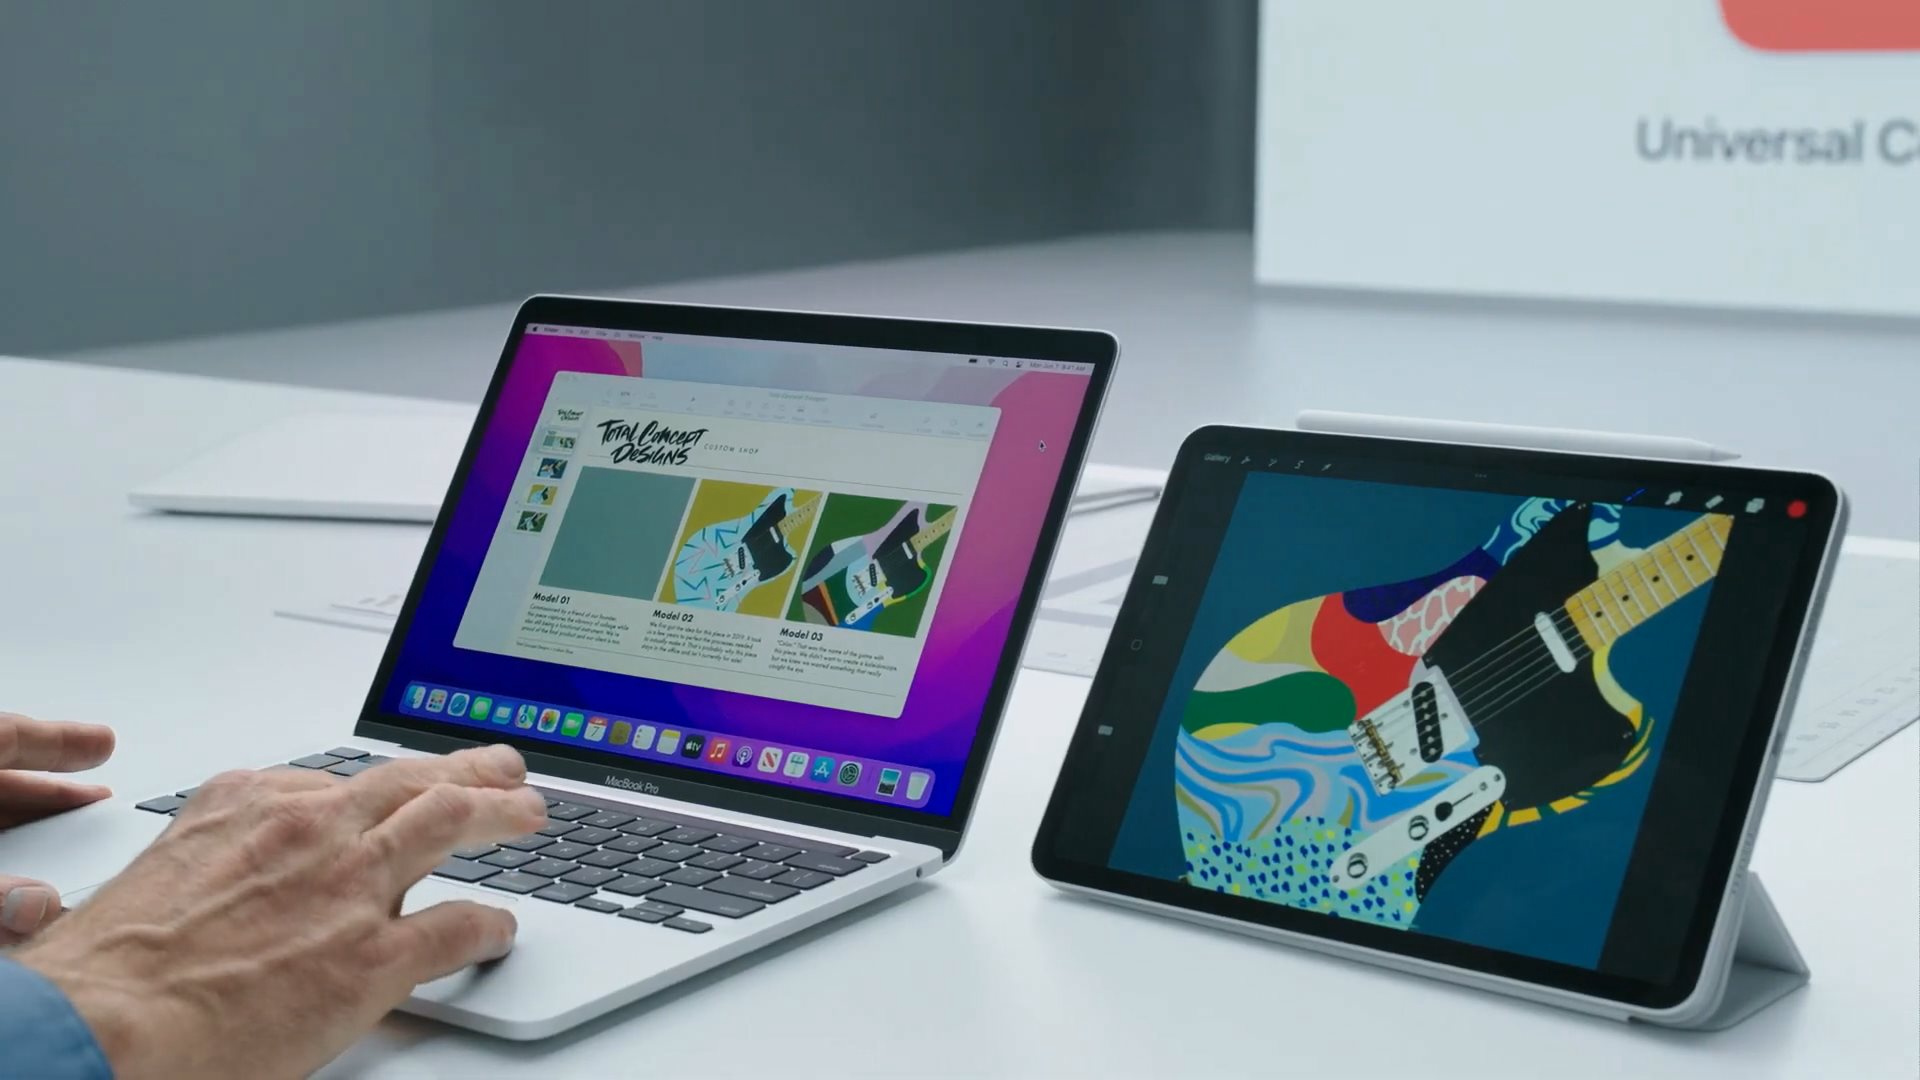 MacとiPadを横に並べるだけで直接連携が可能になる「ユニバーサル ...